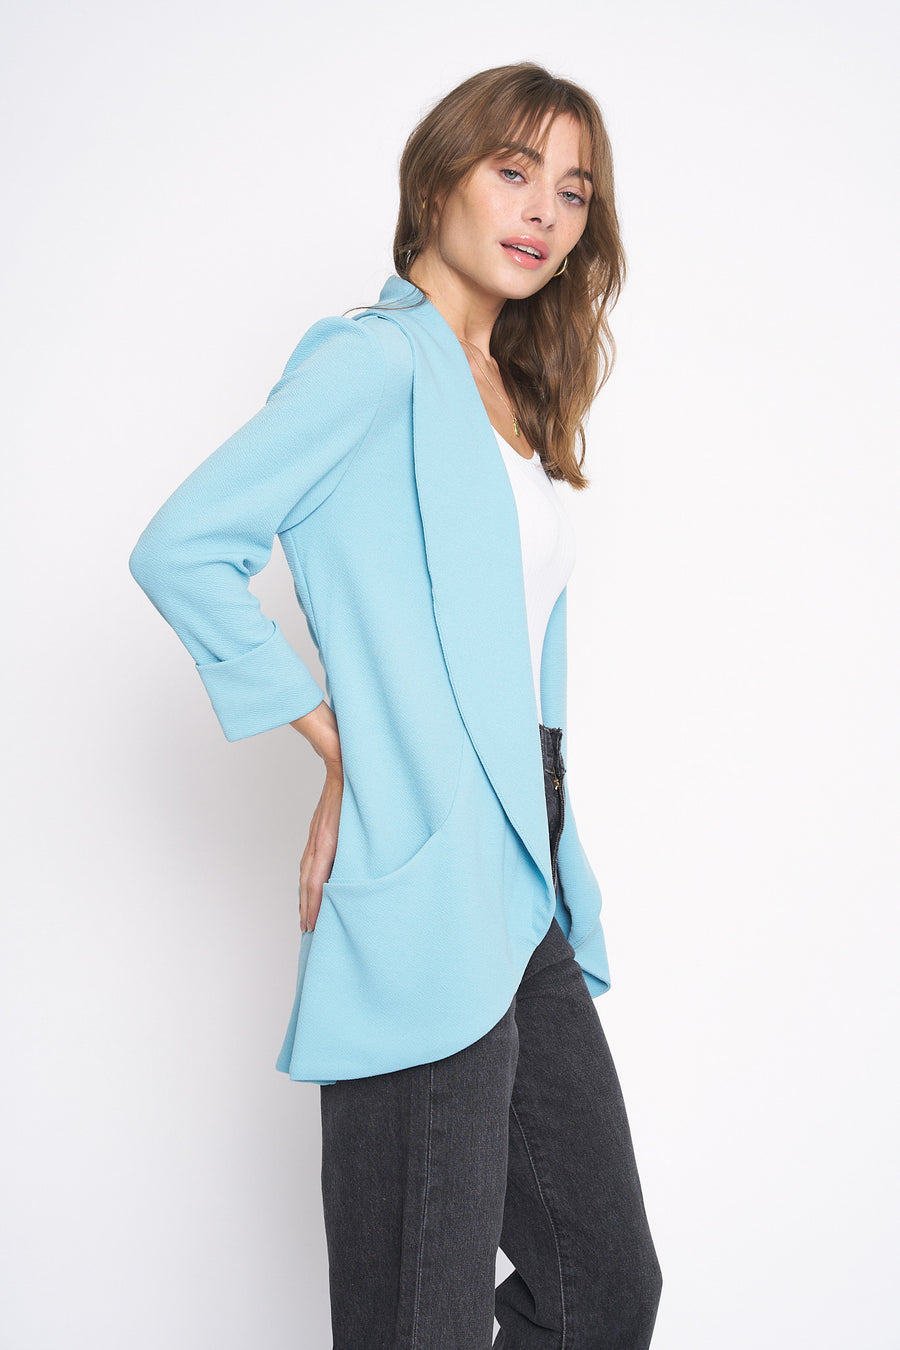 No Srcipt image - Images of 5 of 5 Classic Melanie Shawl Sky Blue Staple Workwear Blazer